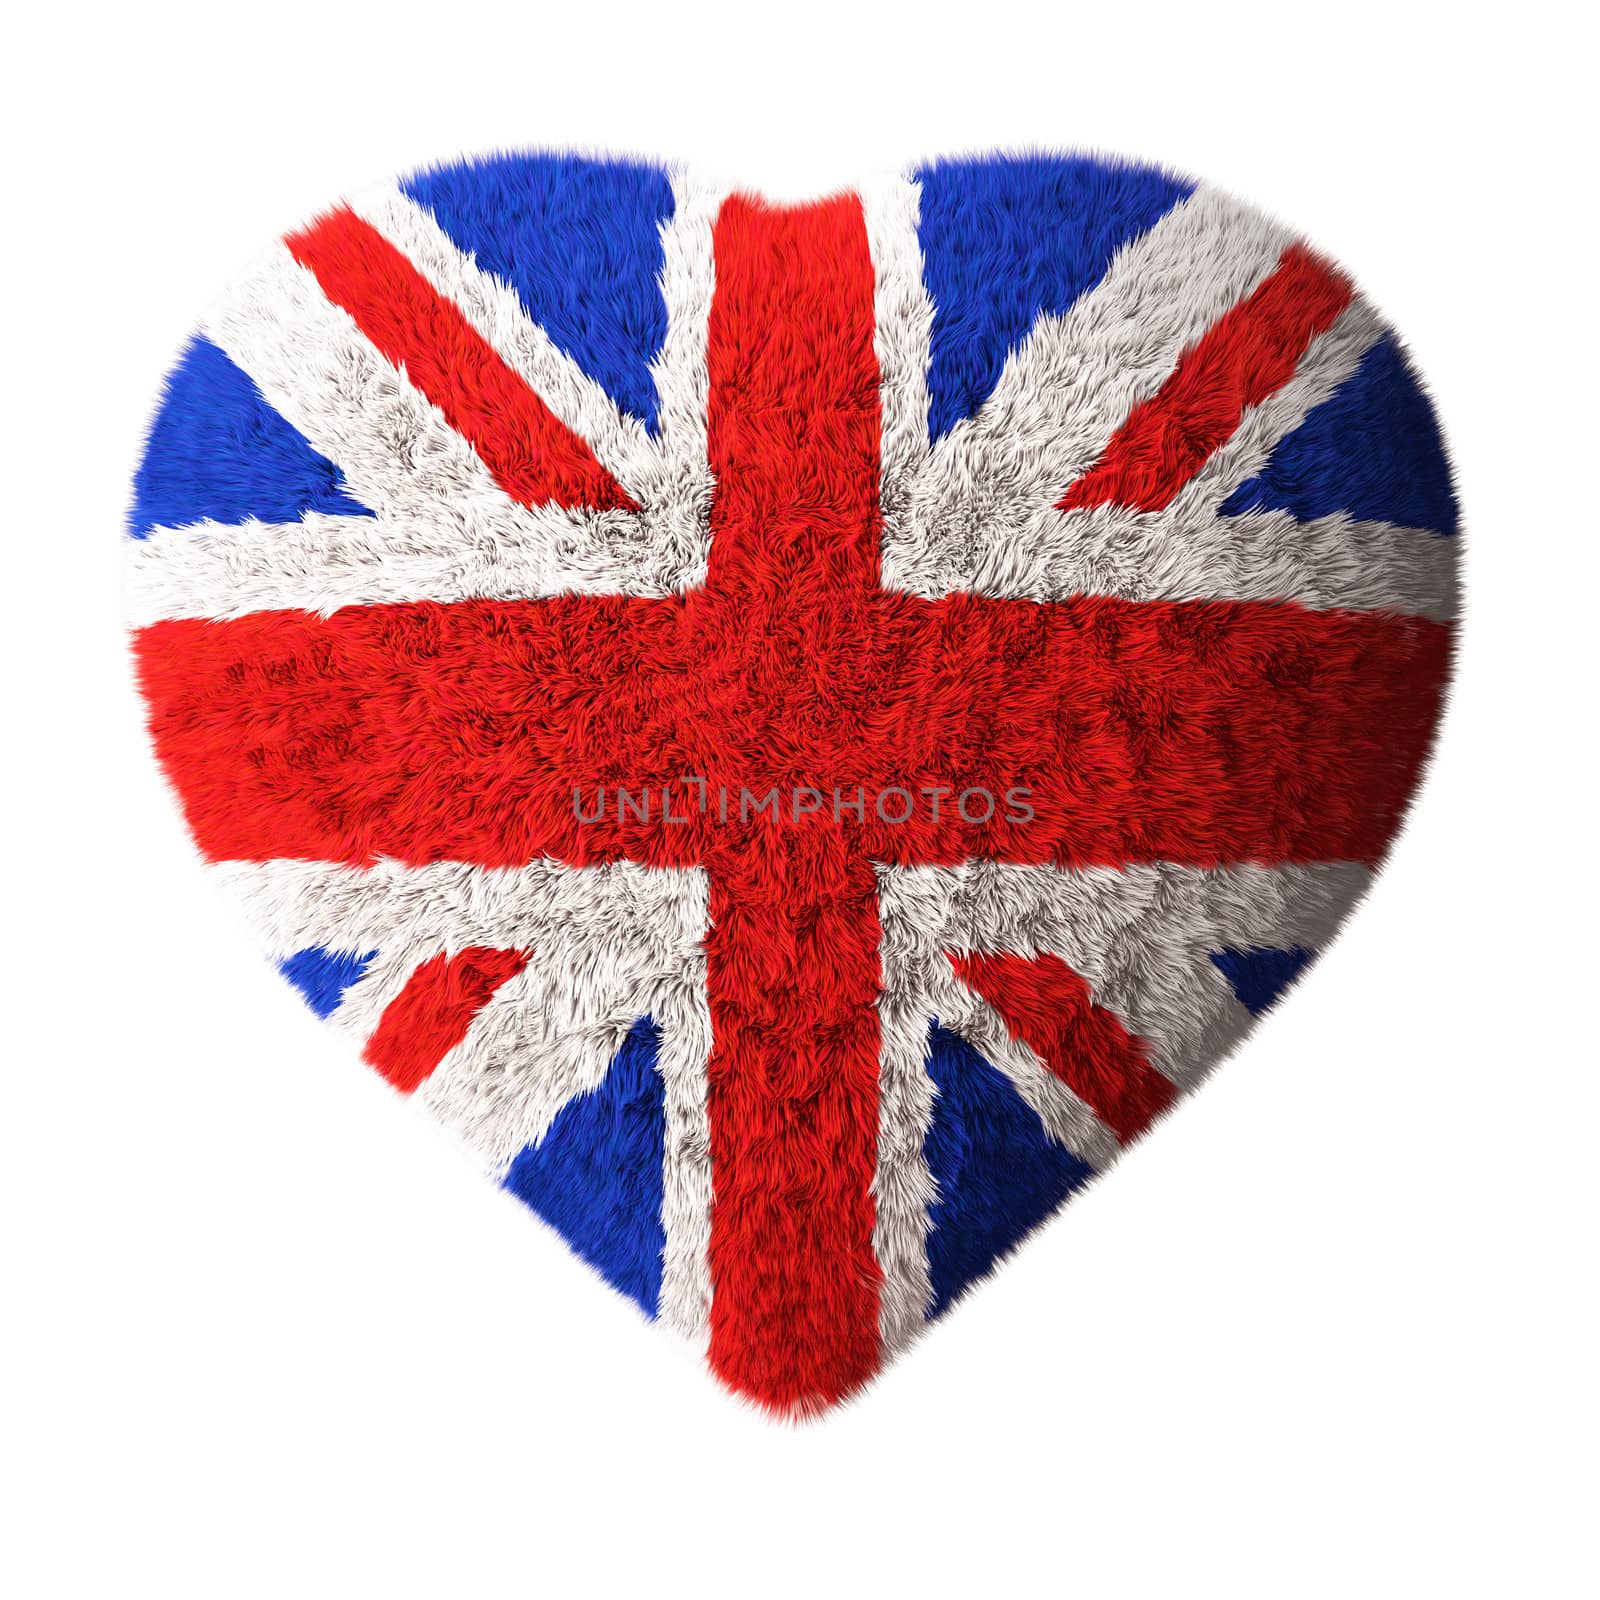 Fluffy heart shaped British flag. isolated on white background.